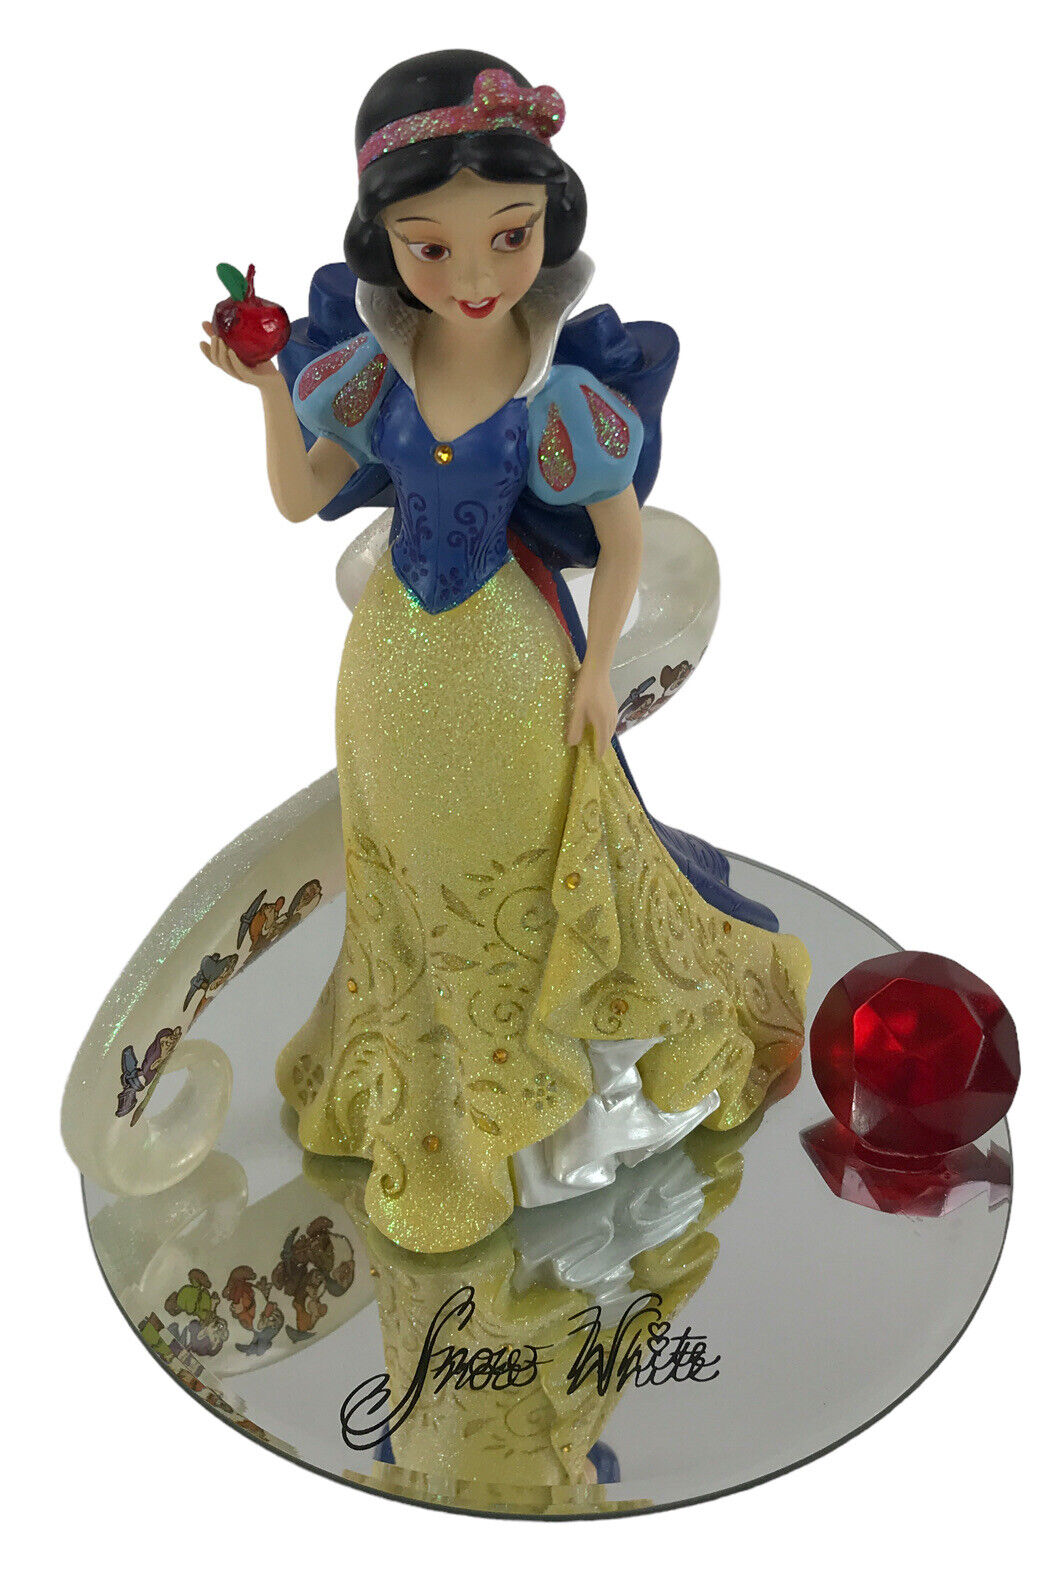 Disney's Snow White: Fairest of Them All Figurine Swarovski Crystals